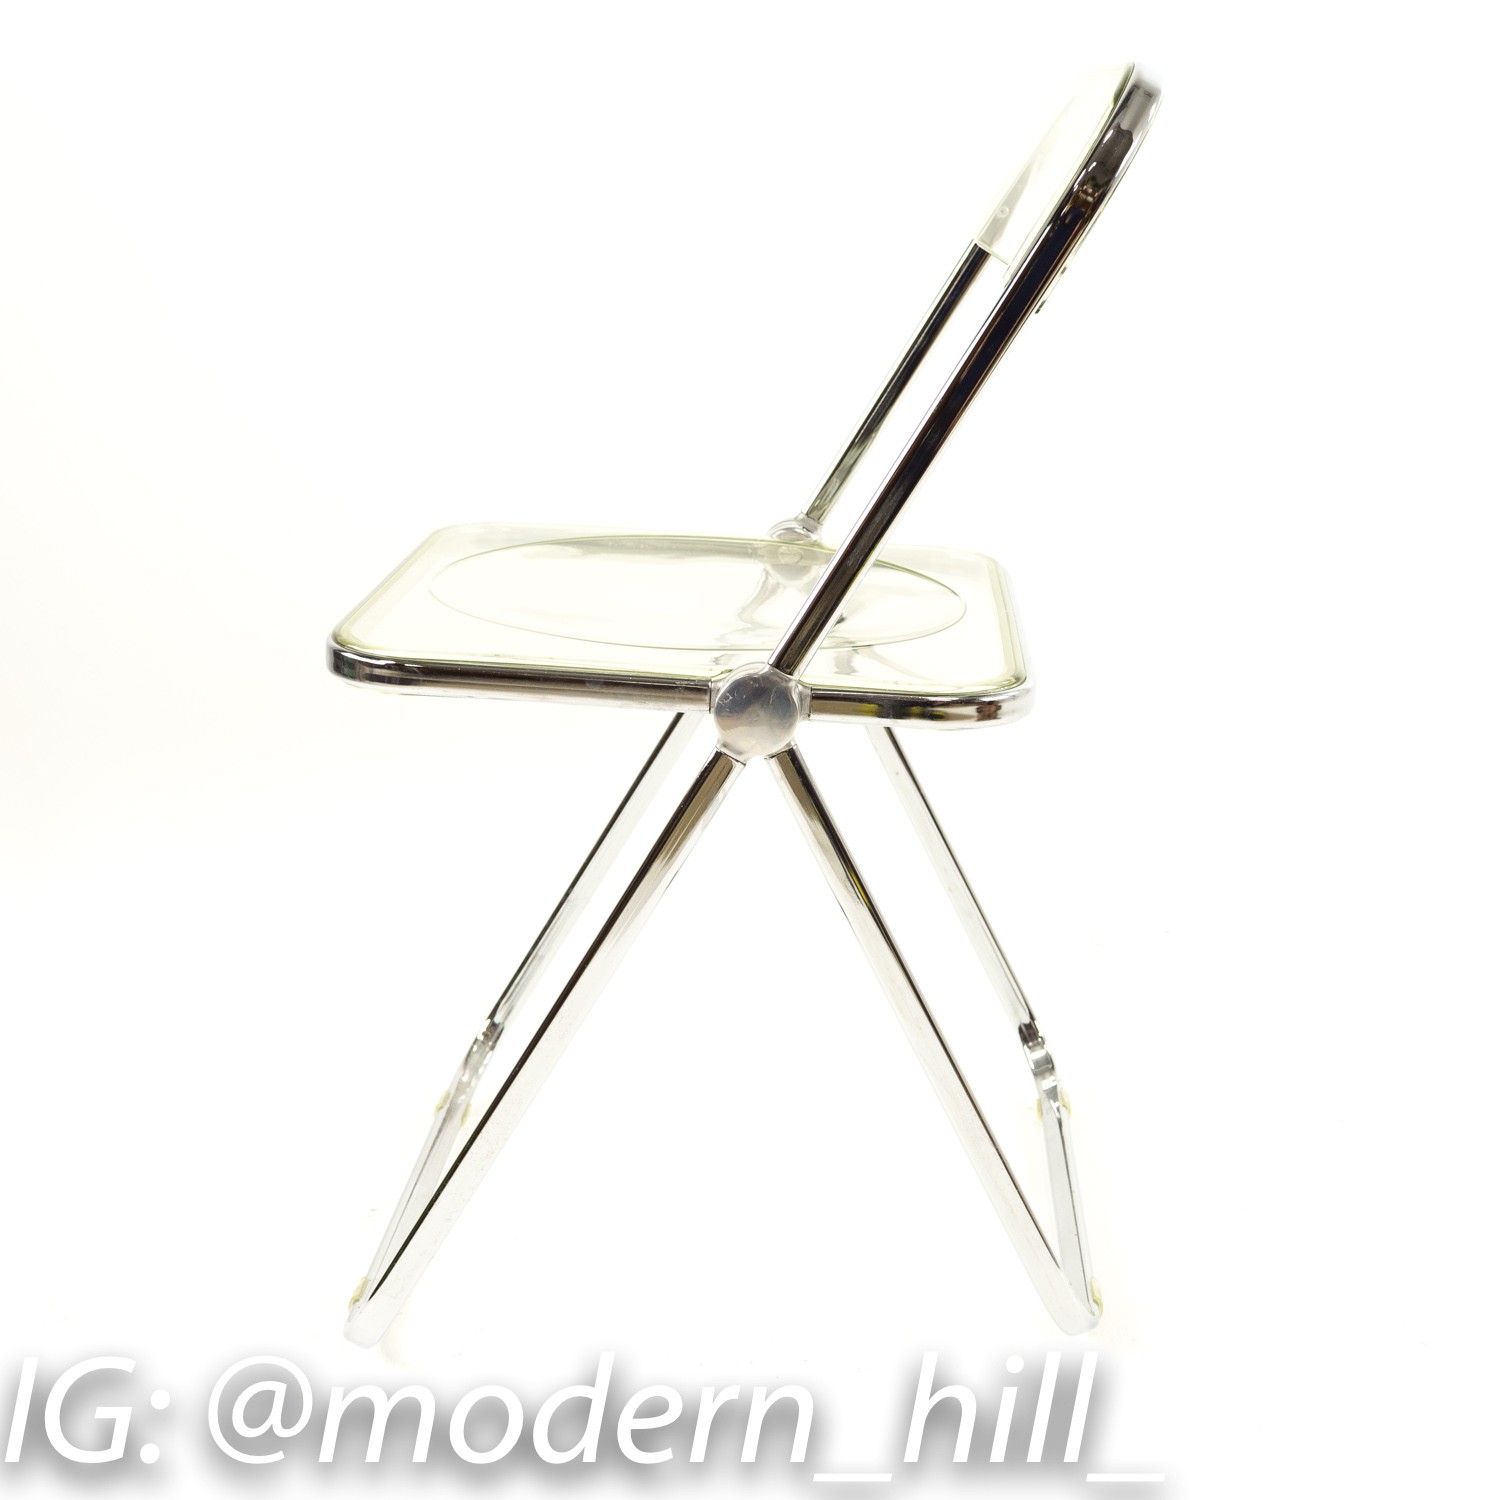 Anonima Castelli Italian Lucite Folding Chairs - Set of 6